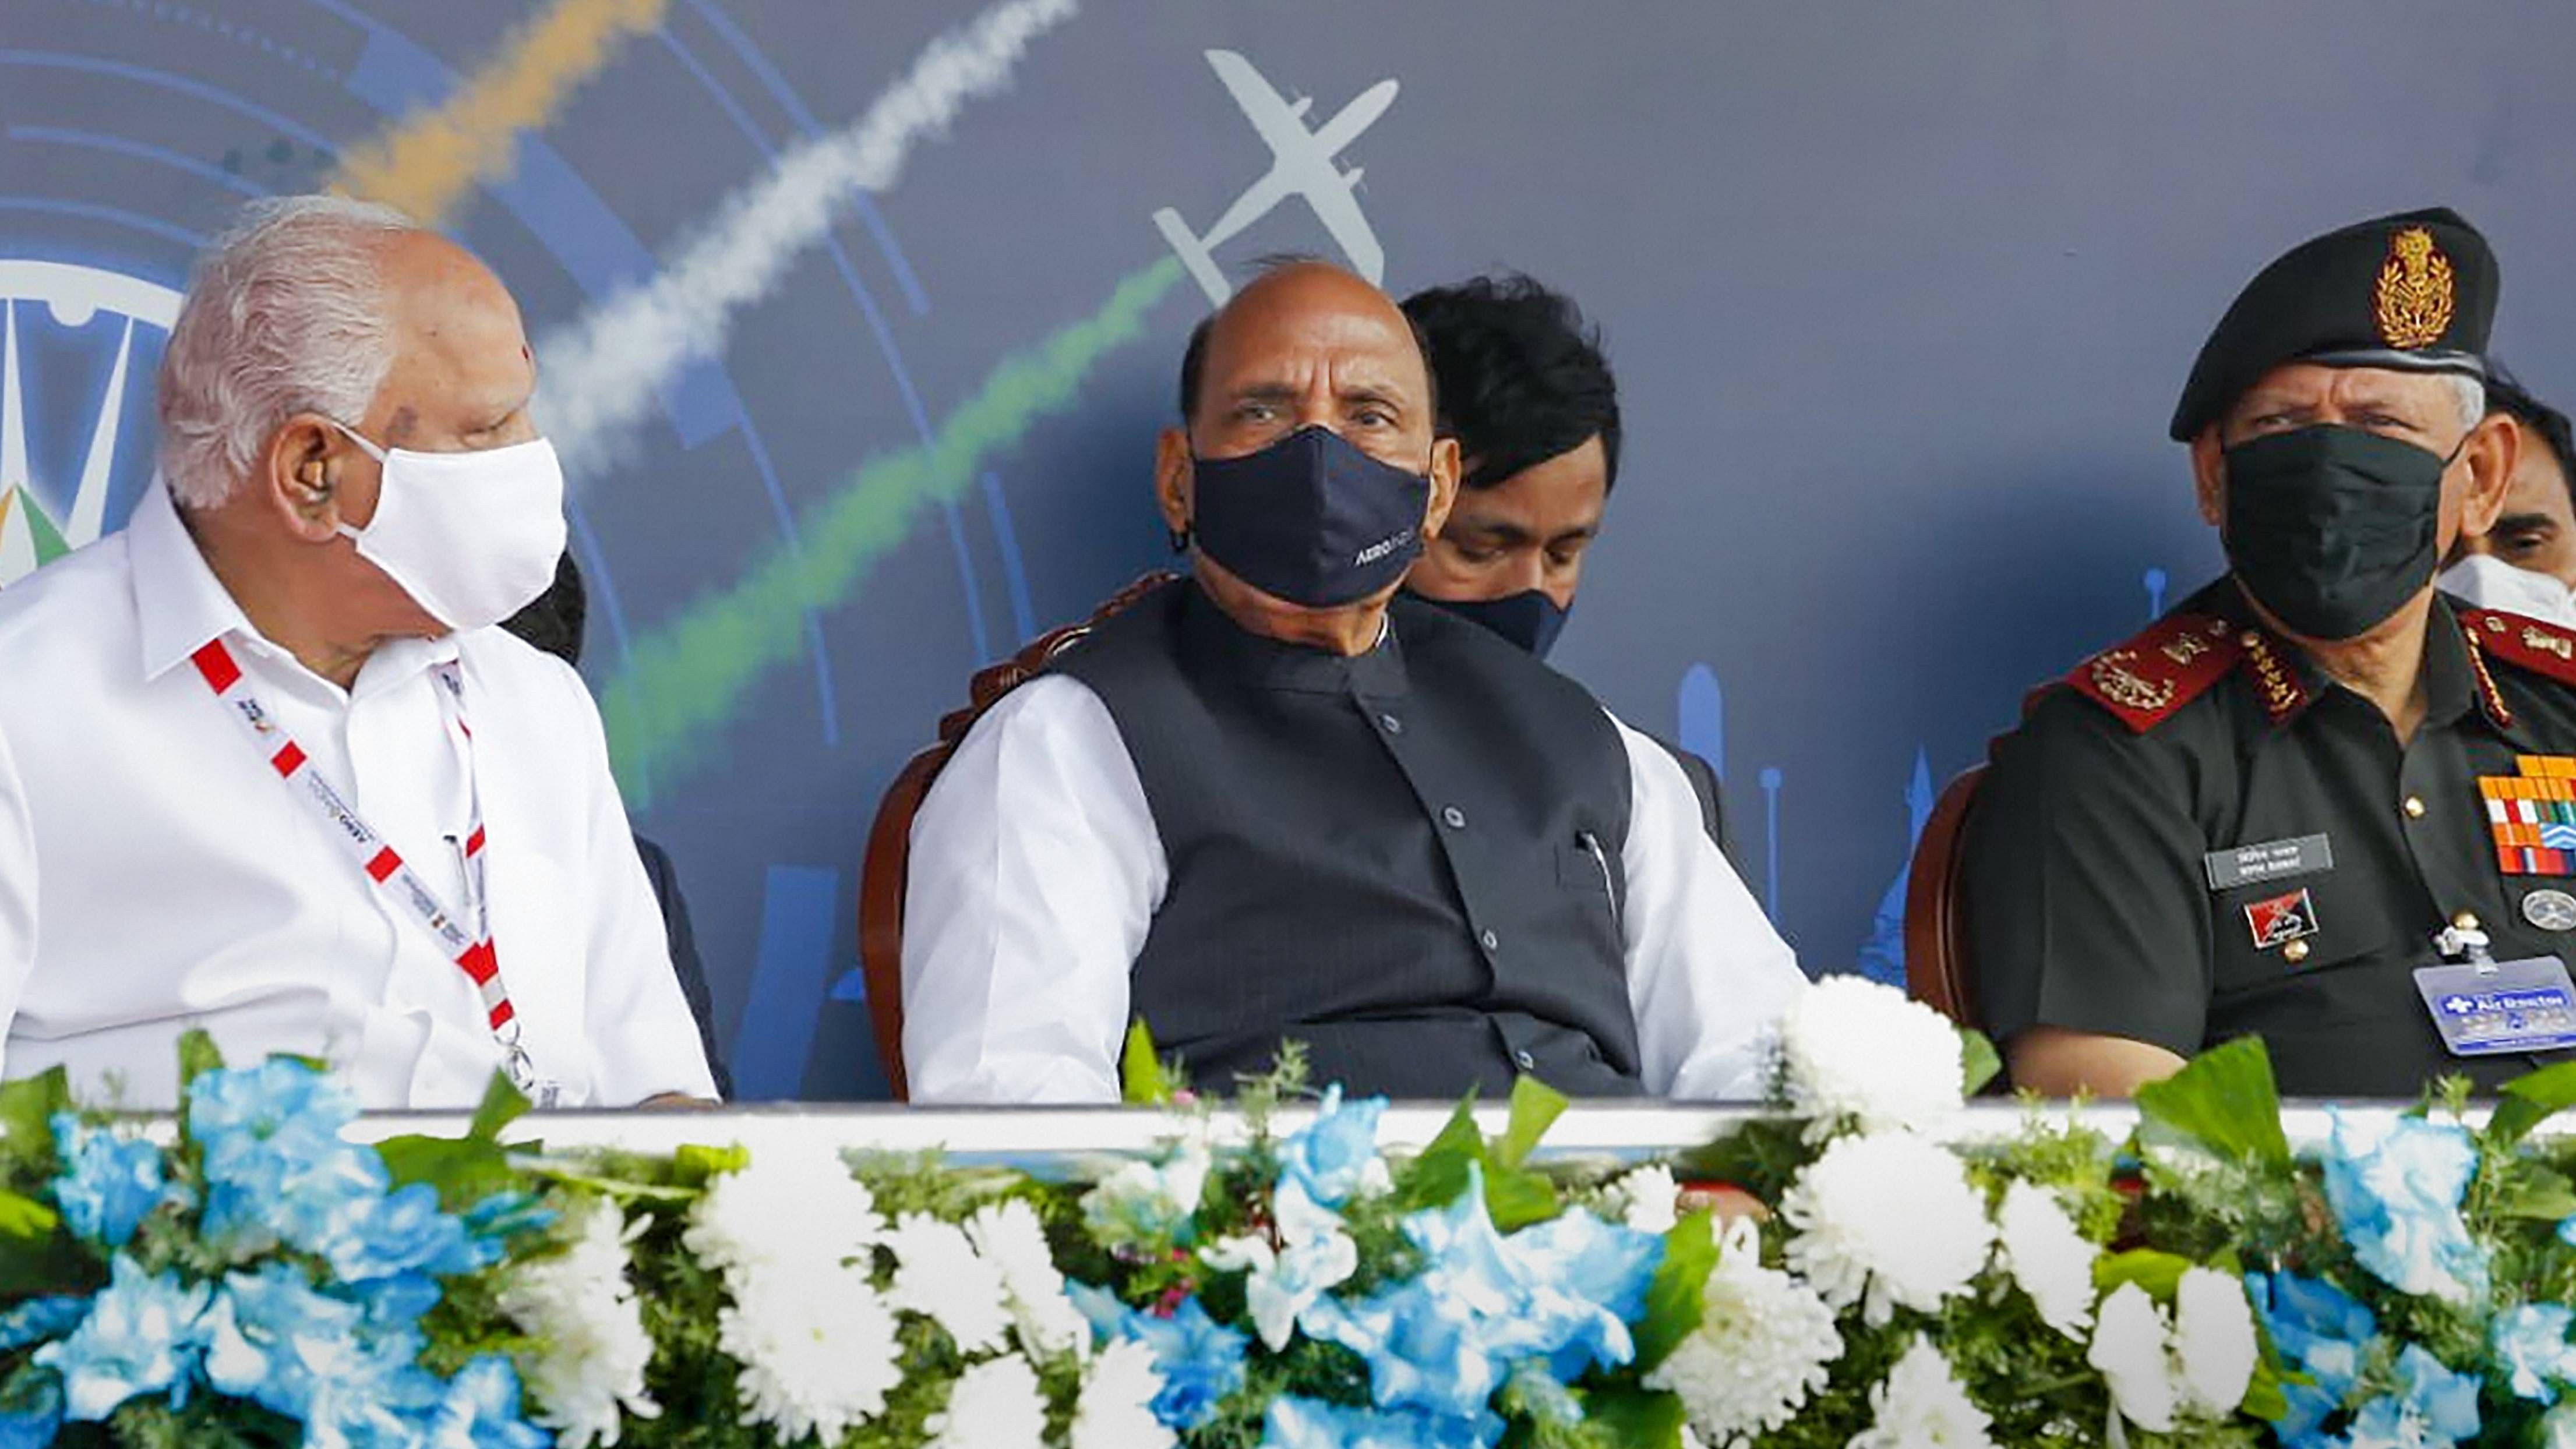 Defence Minister Rajnath Singh along with Karnataka CM BS Yediyurappa and CODS Gen Bipin Rawat during the inaugural ceremony of Aero India 2021 show, in Bengaluru. Credit: PTI